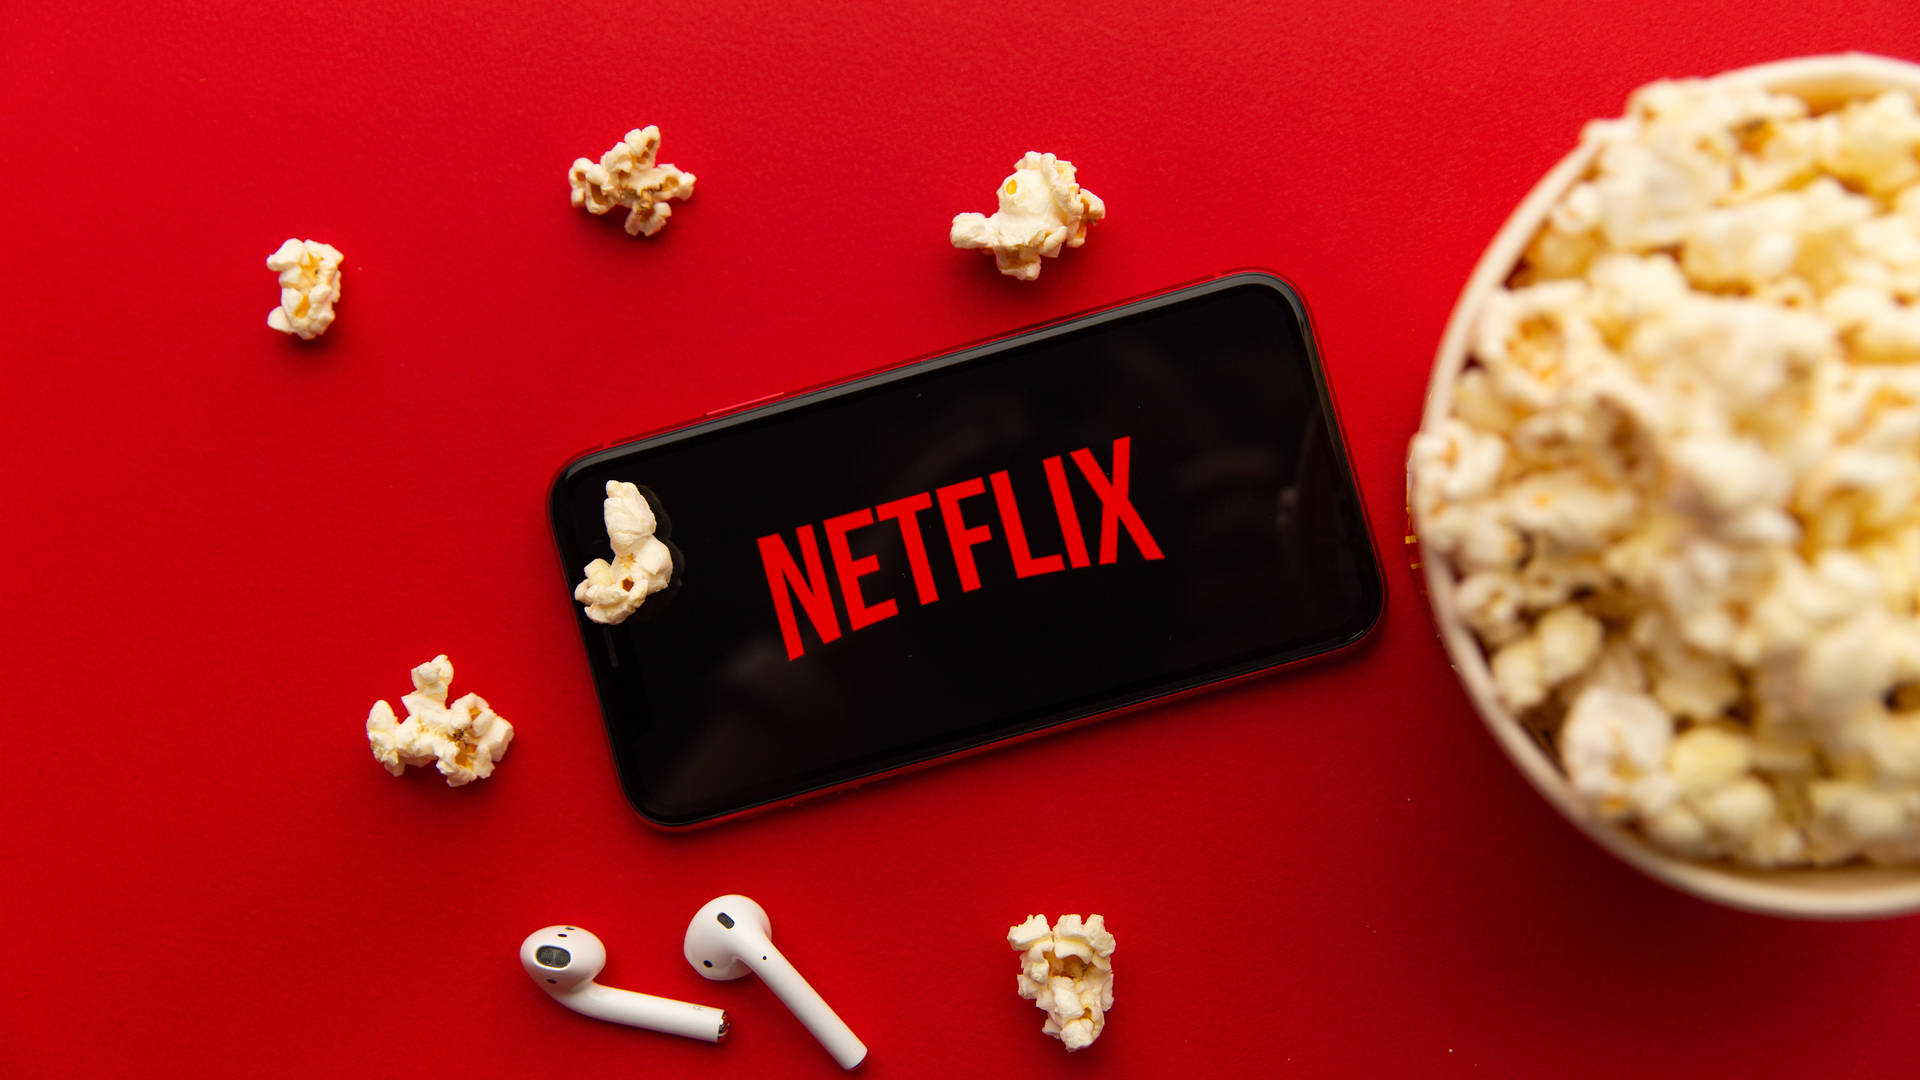 Netflix And Popcorn Background